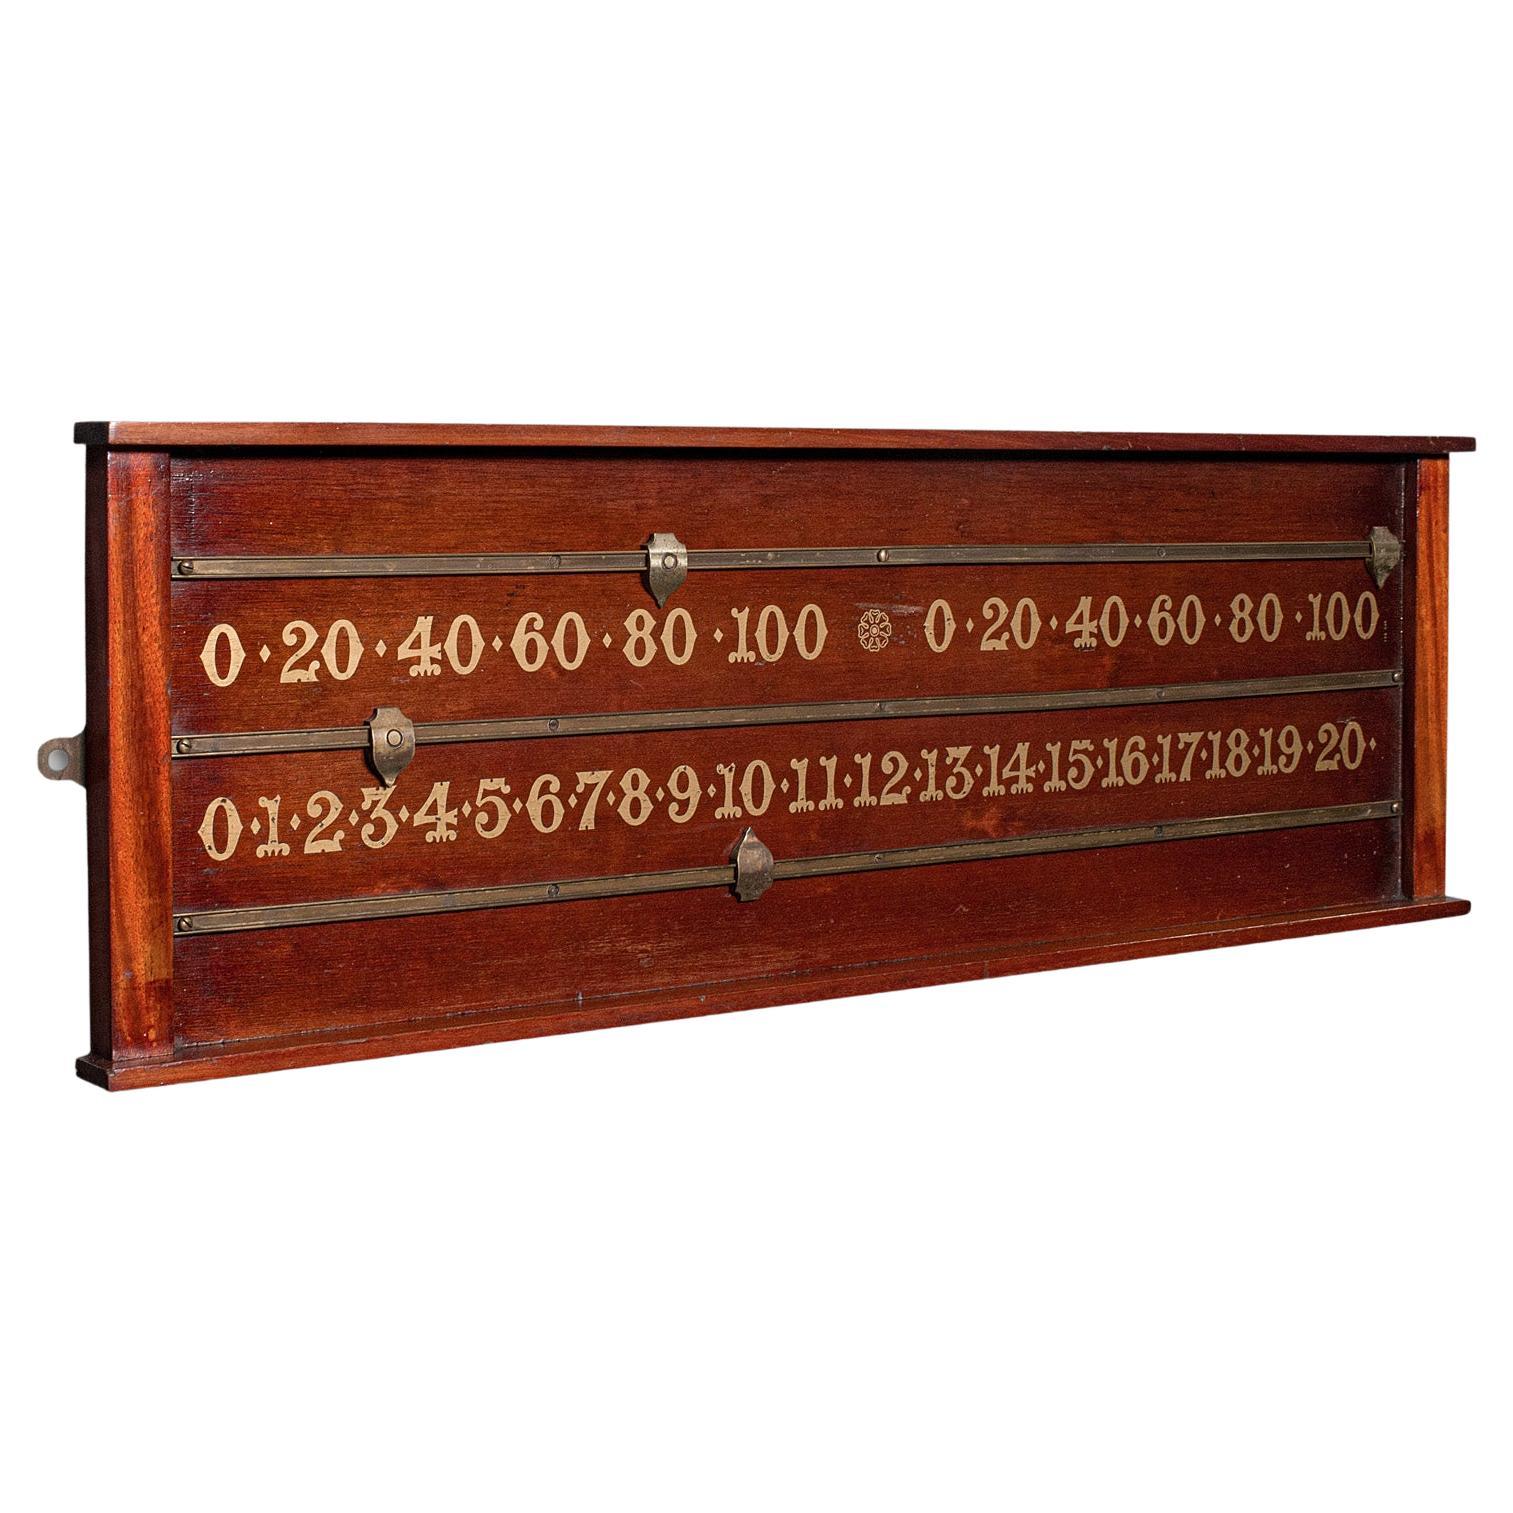 Antique Billiard Scoreboard, English, Games Room, Score Counter, Victorian, 1900 For Sale at 1stDibs